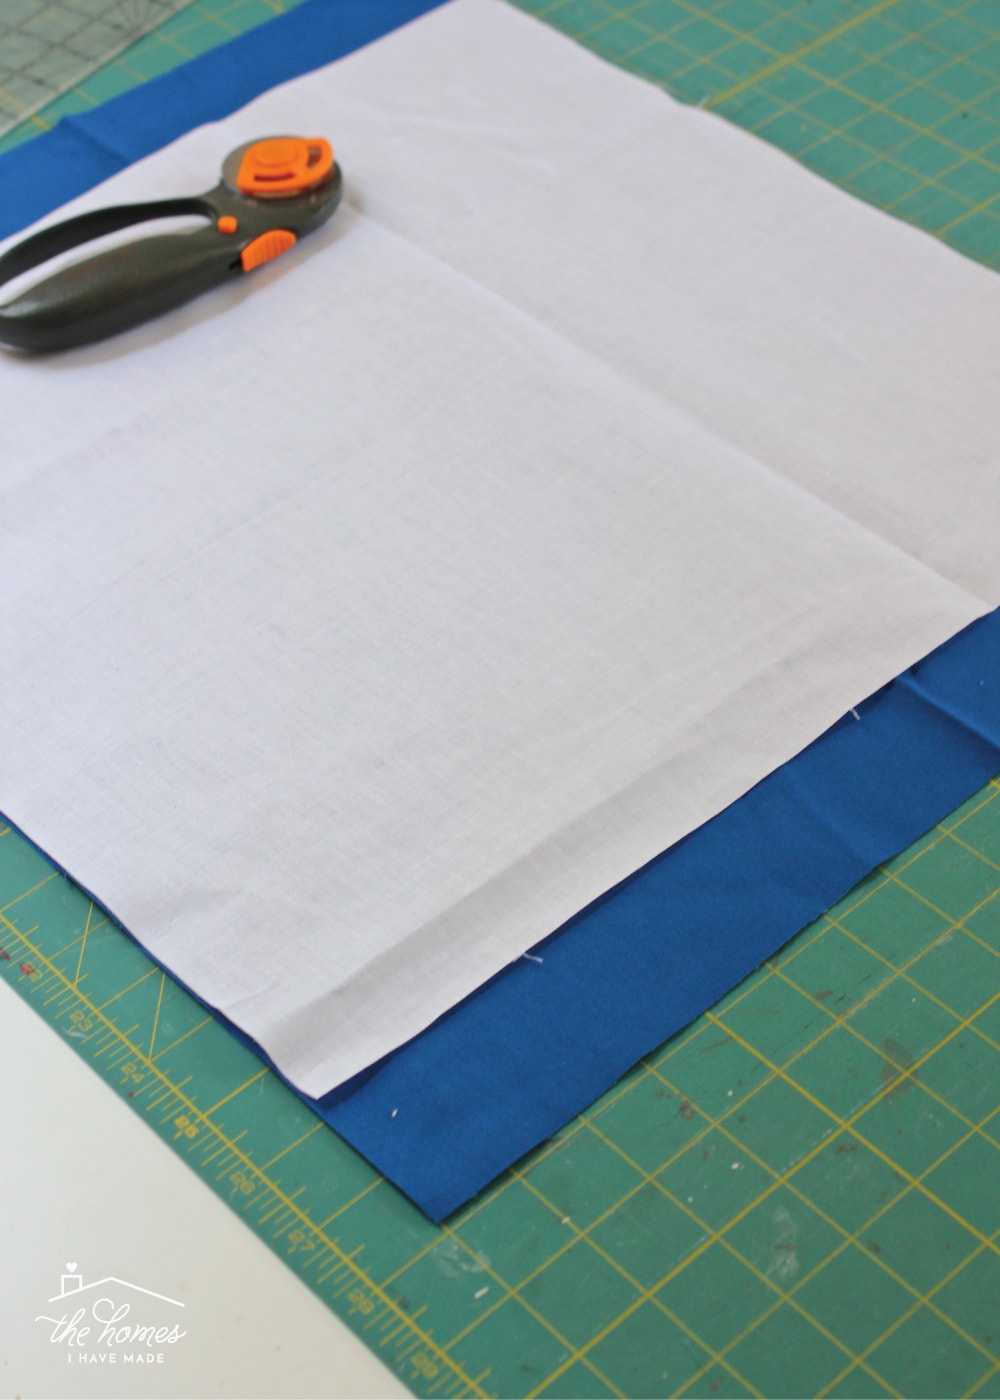 fabric laying on top of a self healing cutting mat